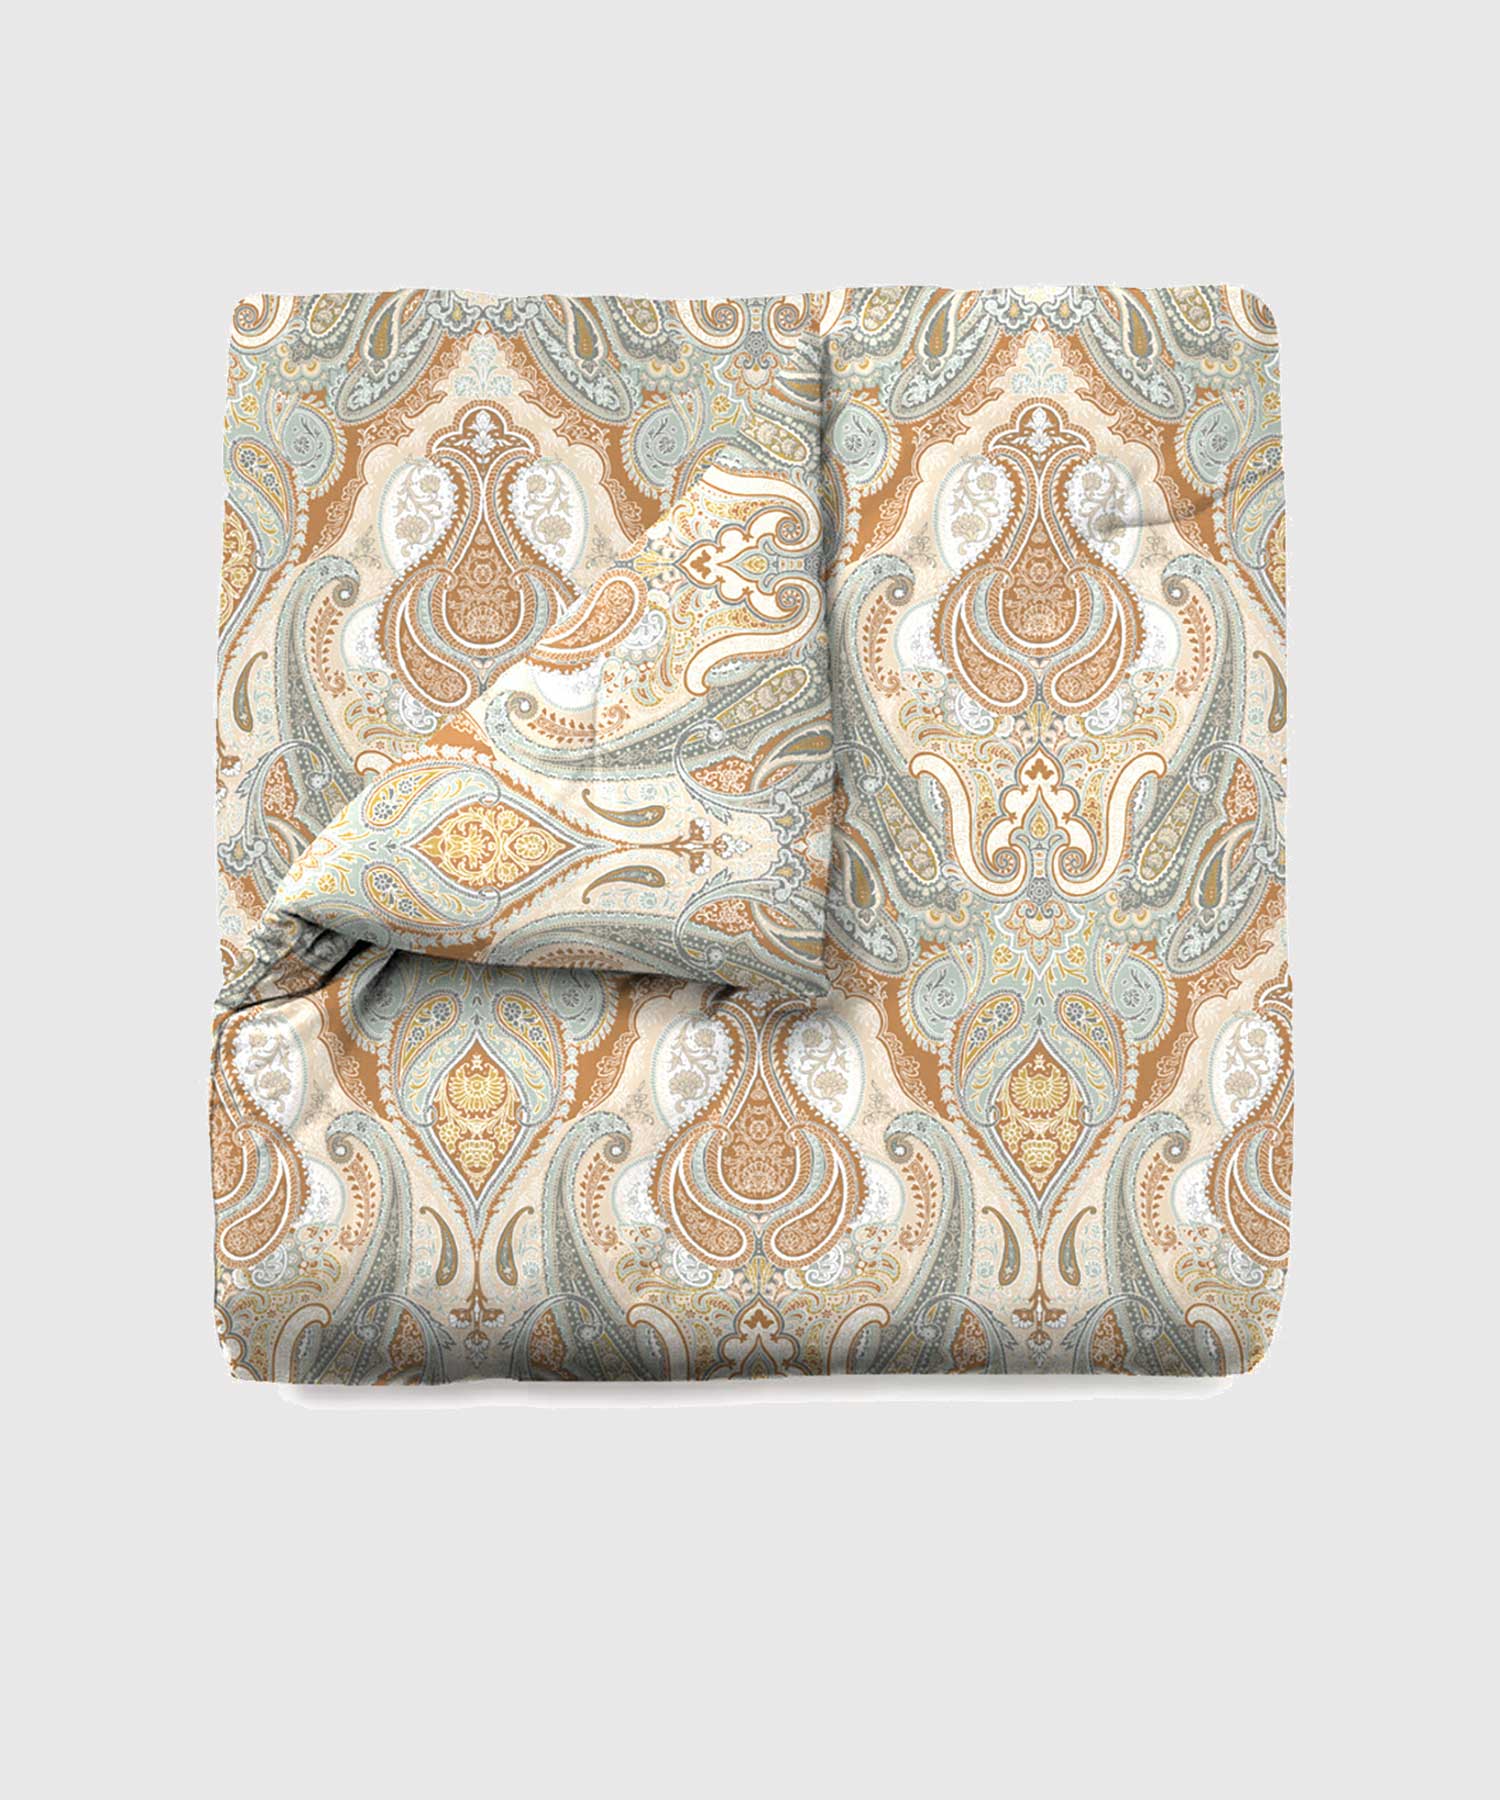 King Size Comforter ₹6499